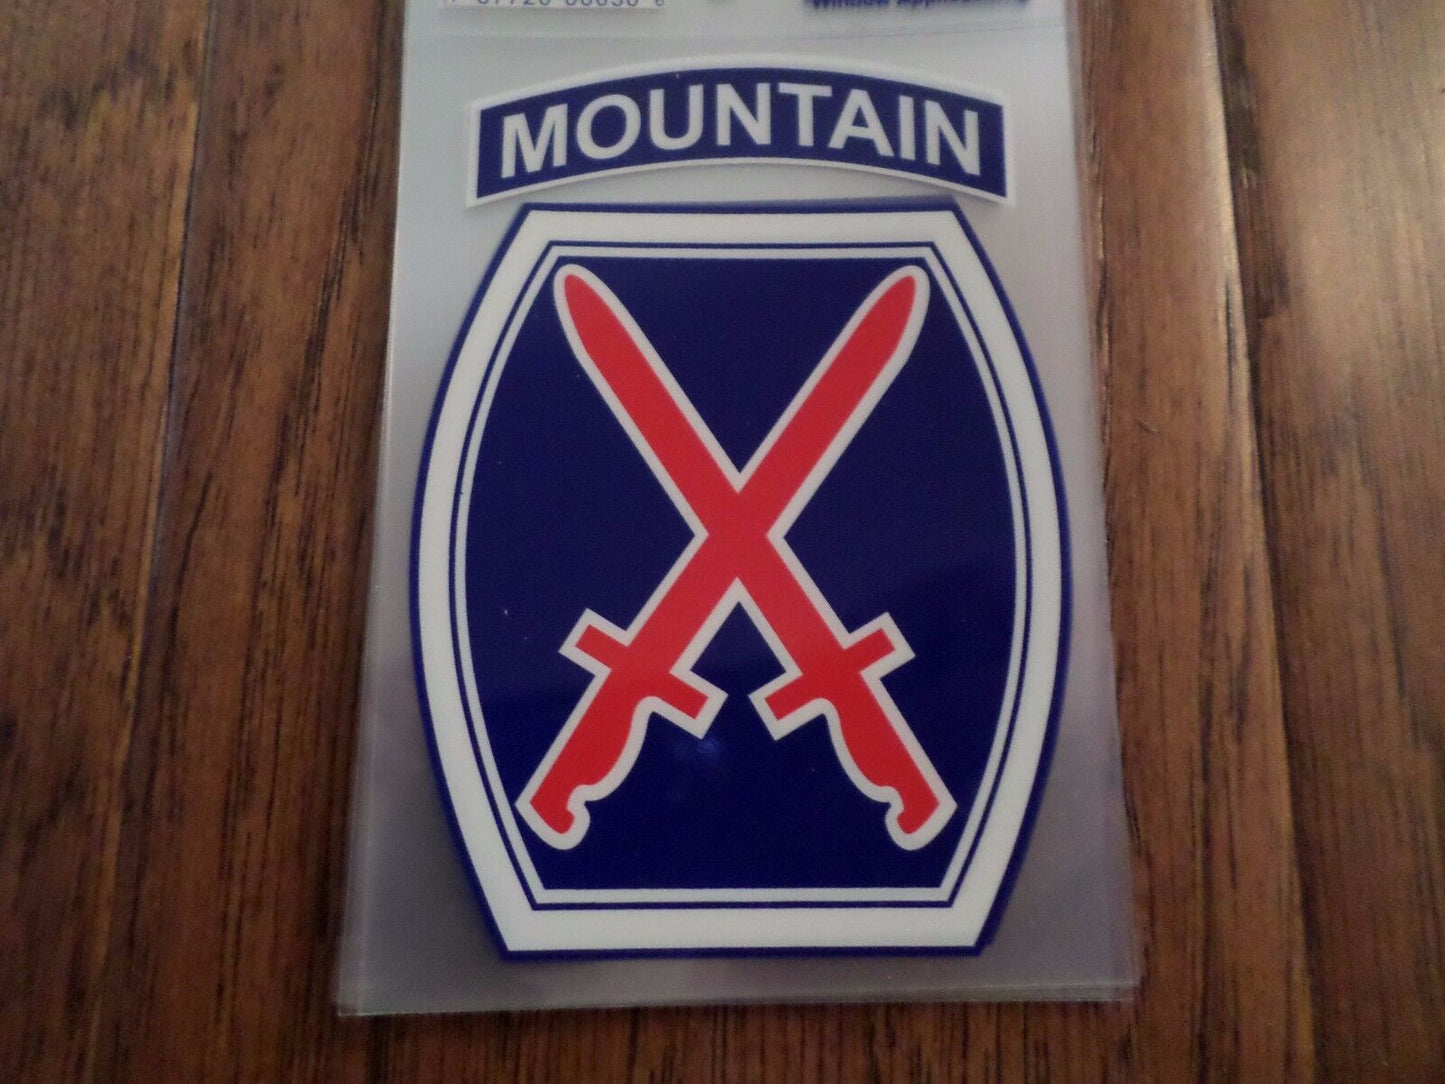 U.S MILITARY ARMY 10TH MOUNTAIN WINDOW DECAL BUMPER STICKER 3.25 X 4.25